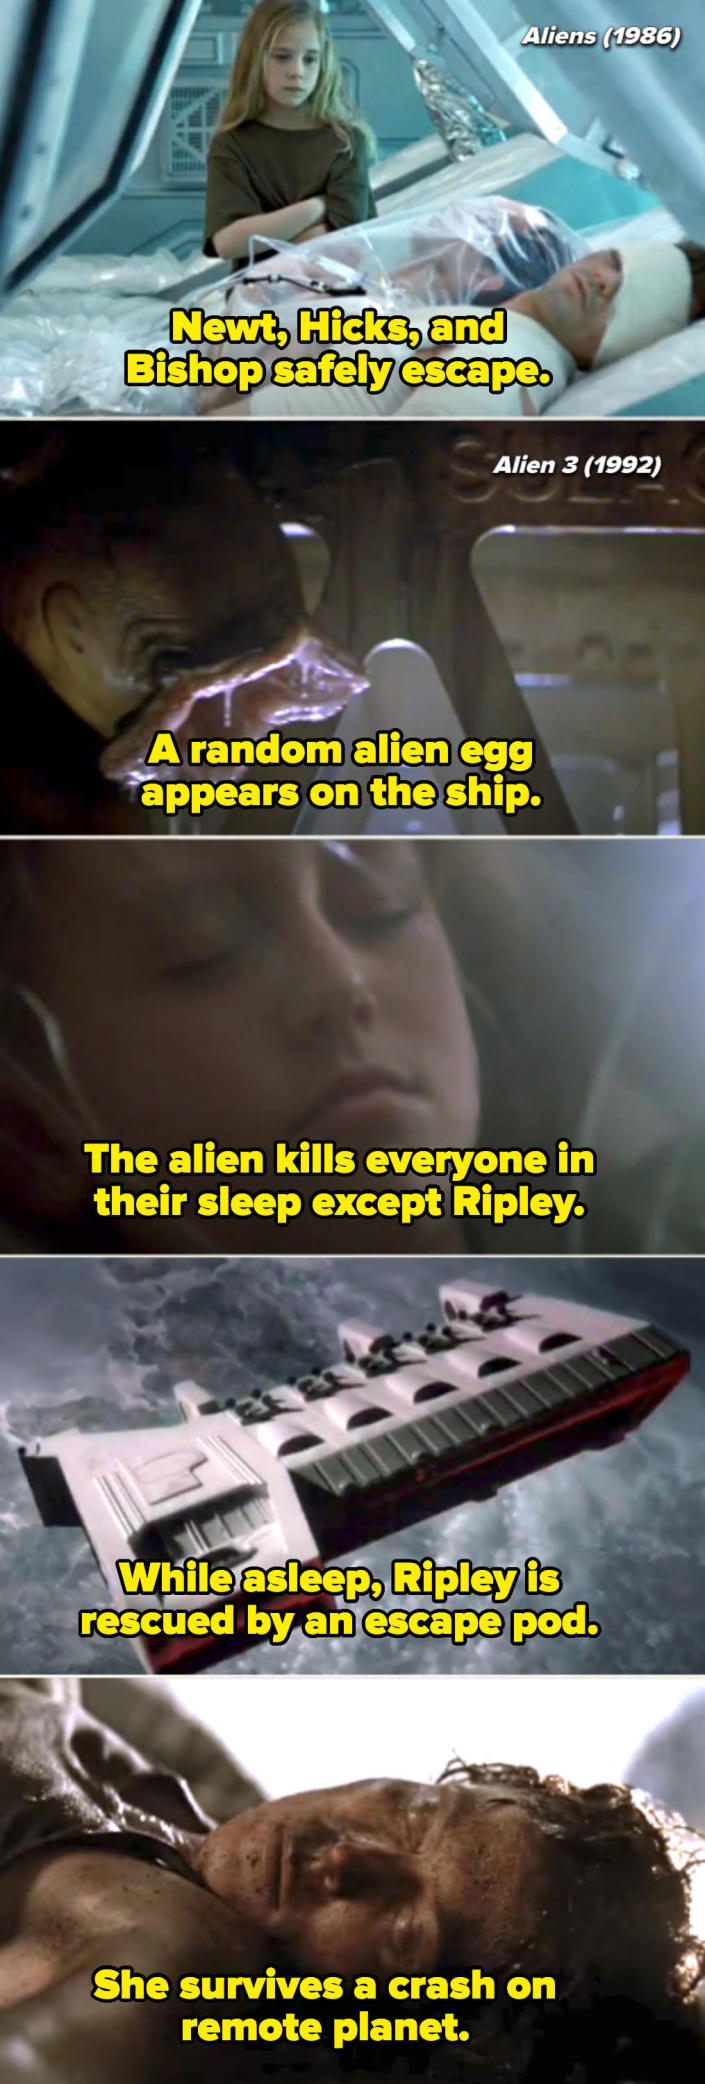 Screen shots from &quot;Alien 3&quot;